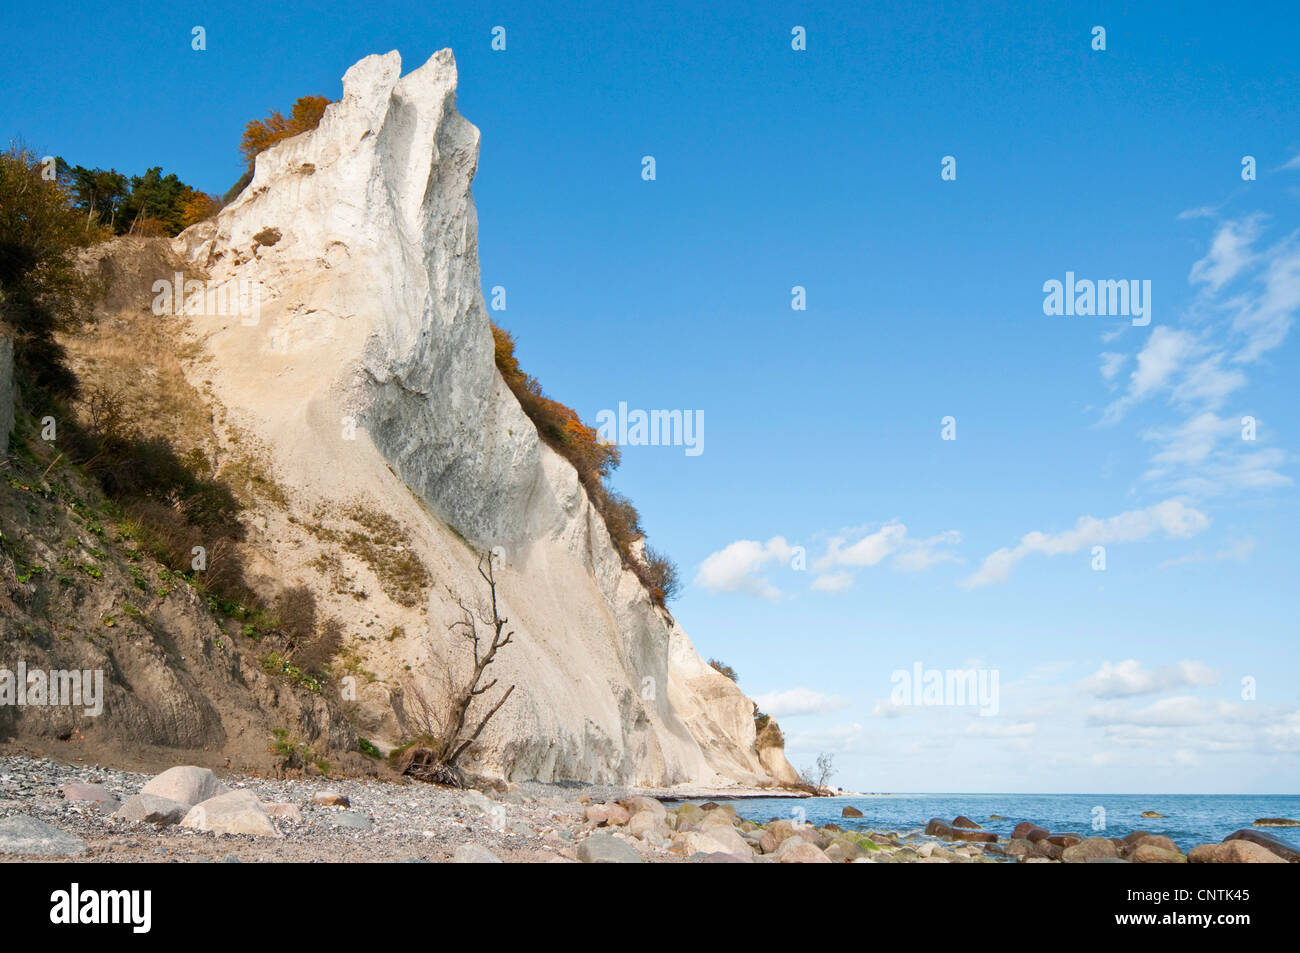 Chalk acantilado en la isla de Moen, Dinamarca, Moen Foto de stock